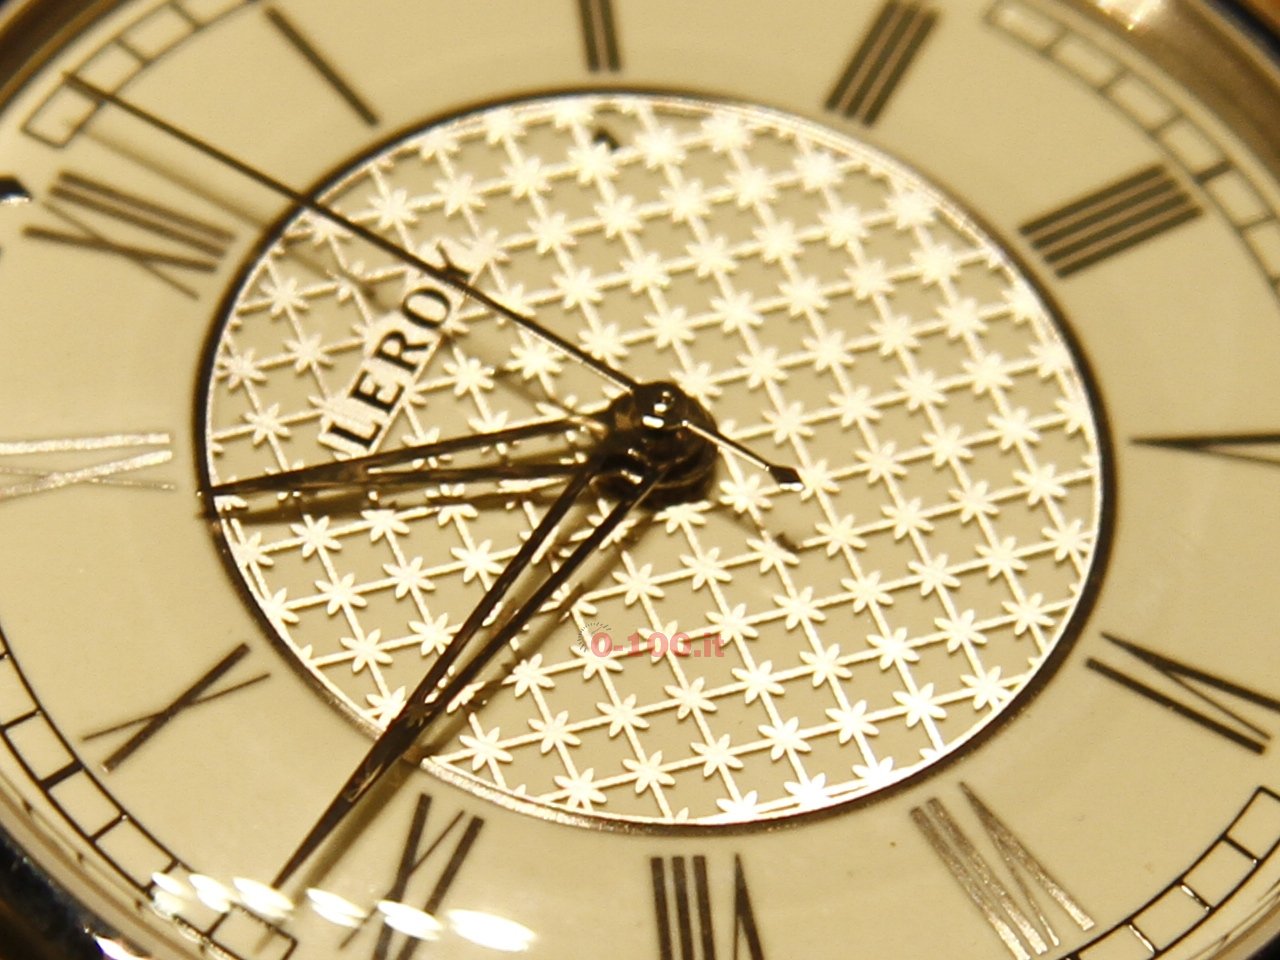 baselworld-2015_leroy-chronometer-a-tourbillon-0-100-11